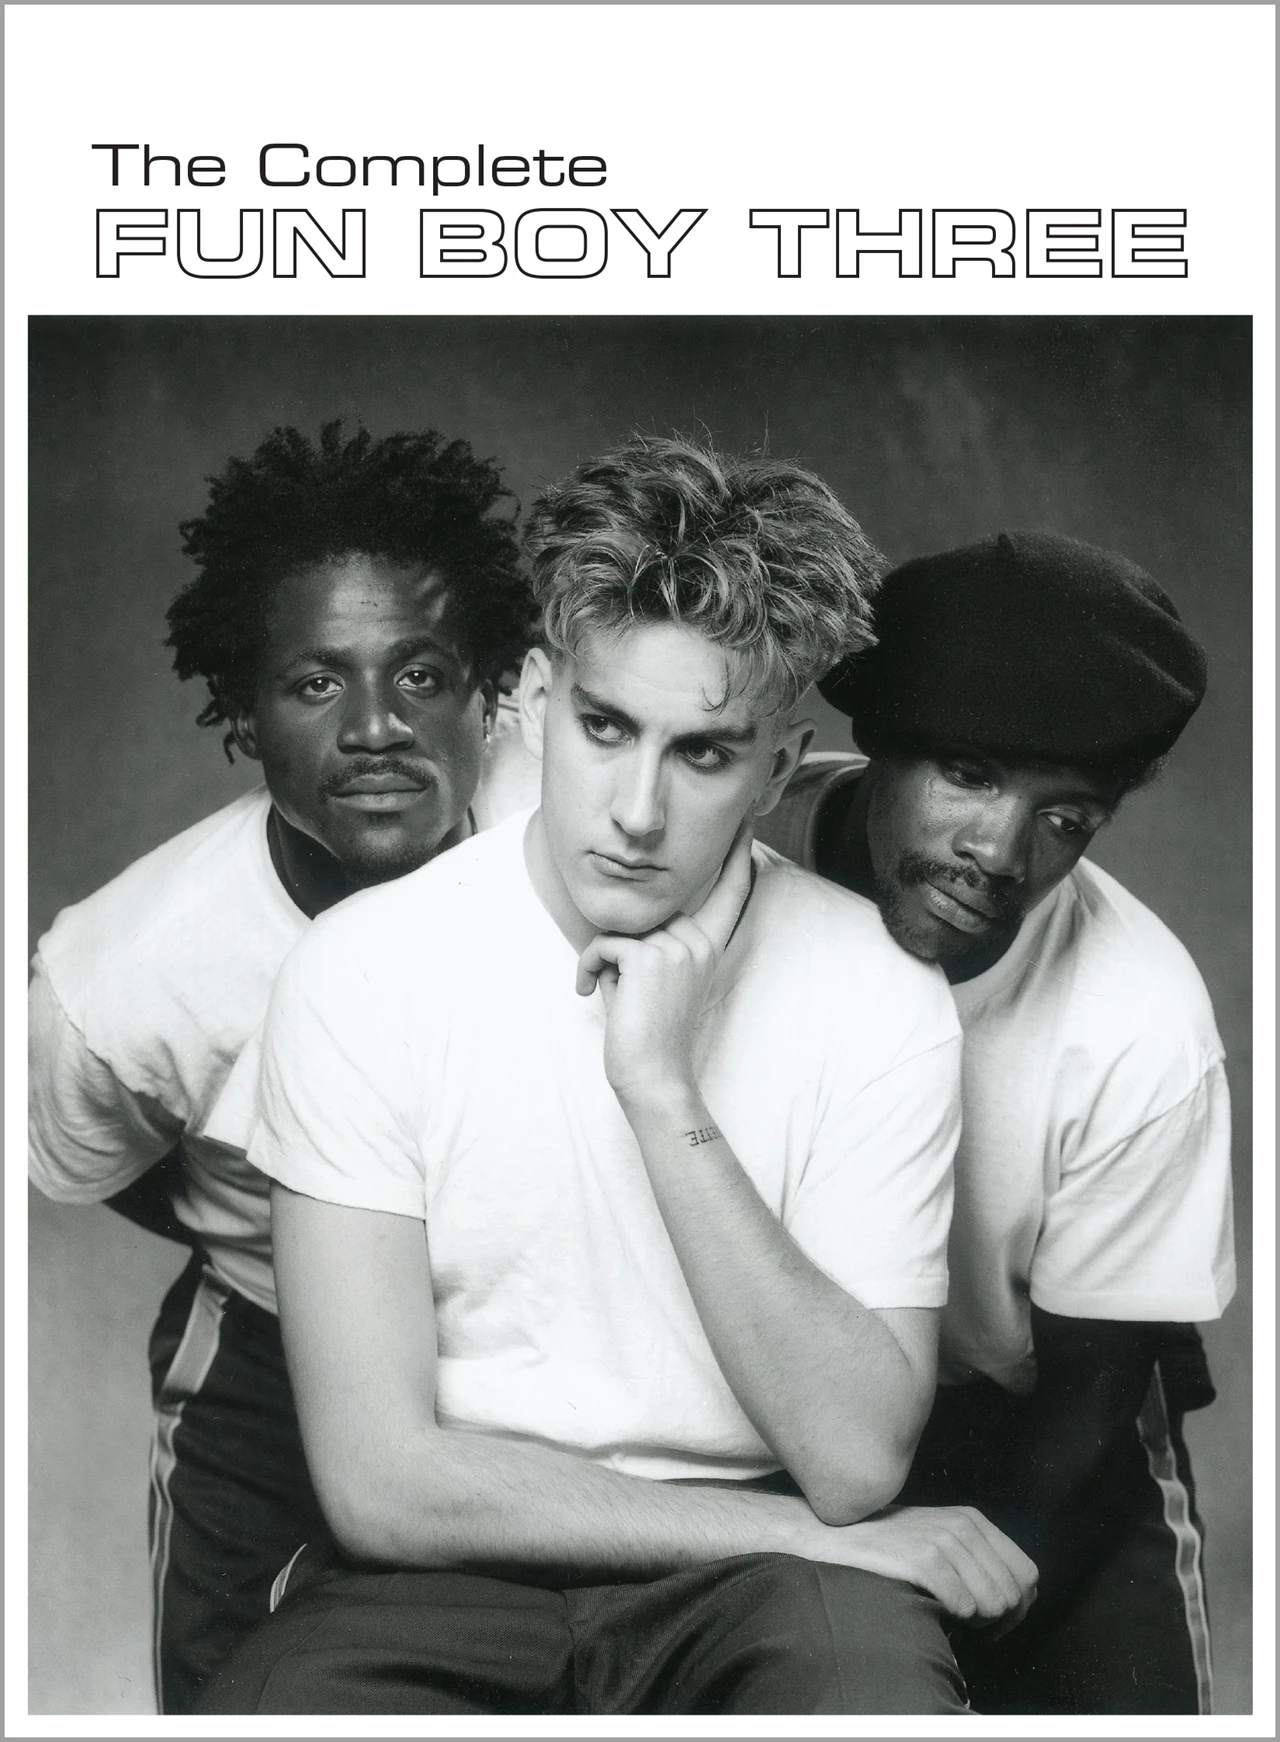 Fun Boy Three   The Complete Fun Boy Three Chrysalis Records